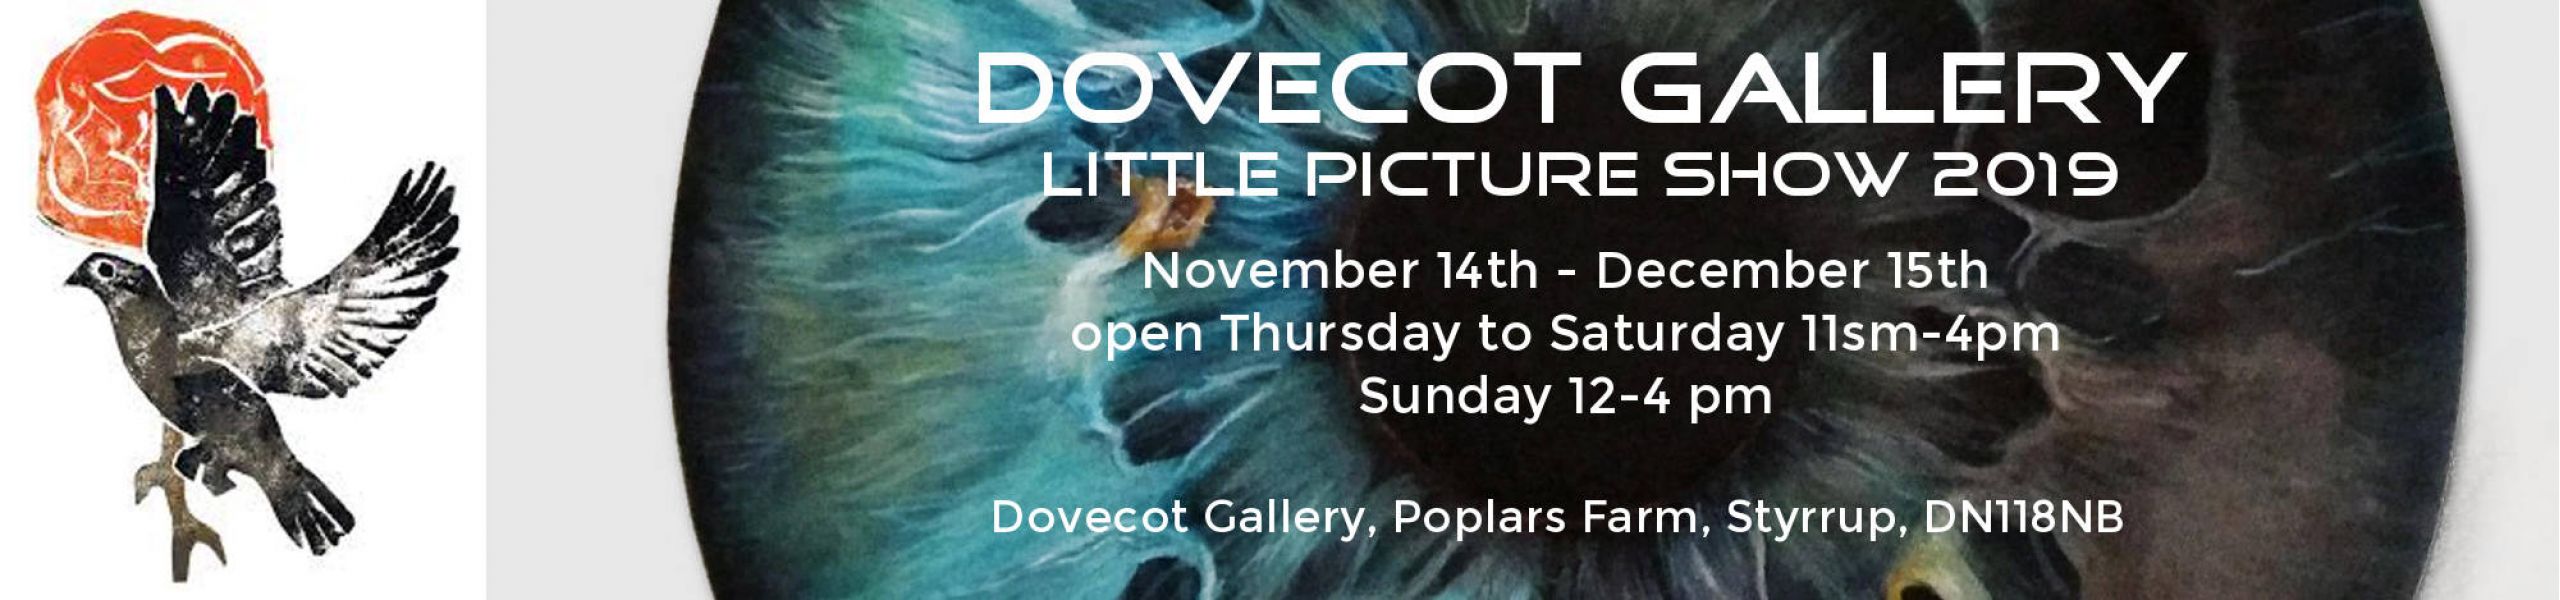 Dovecot Gallery - oncaster - Elisa Neri